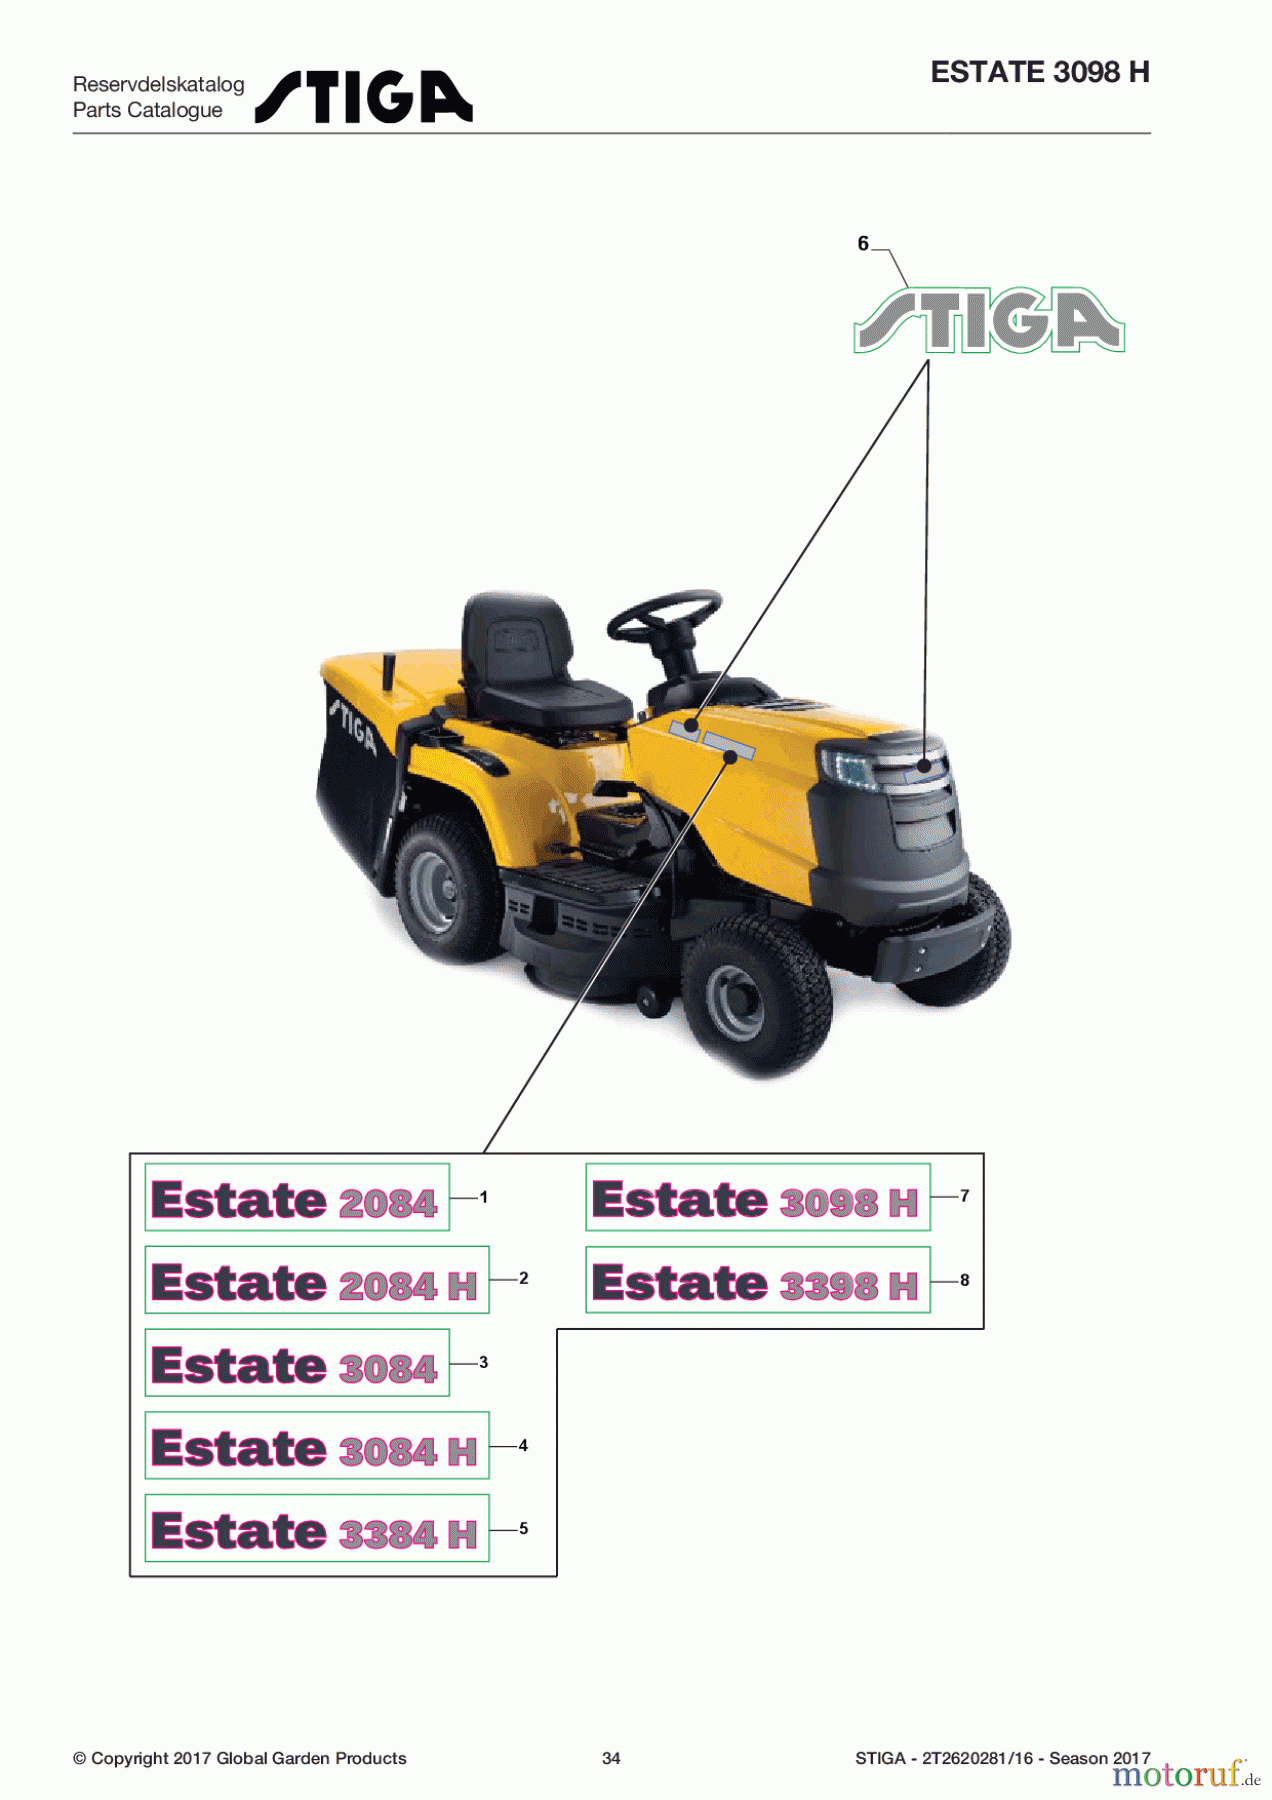  Stiga Rasentraktoren Estate, Tornado tractors 98 cm Sammelfunktion Baujahr 2017 ESTATE 3098 H 2T2620281/16 - Season 2017 Labels